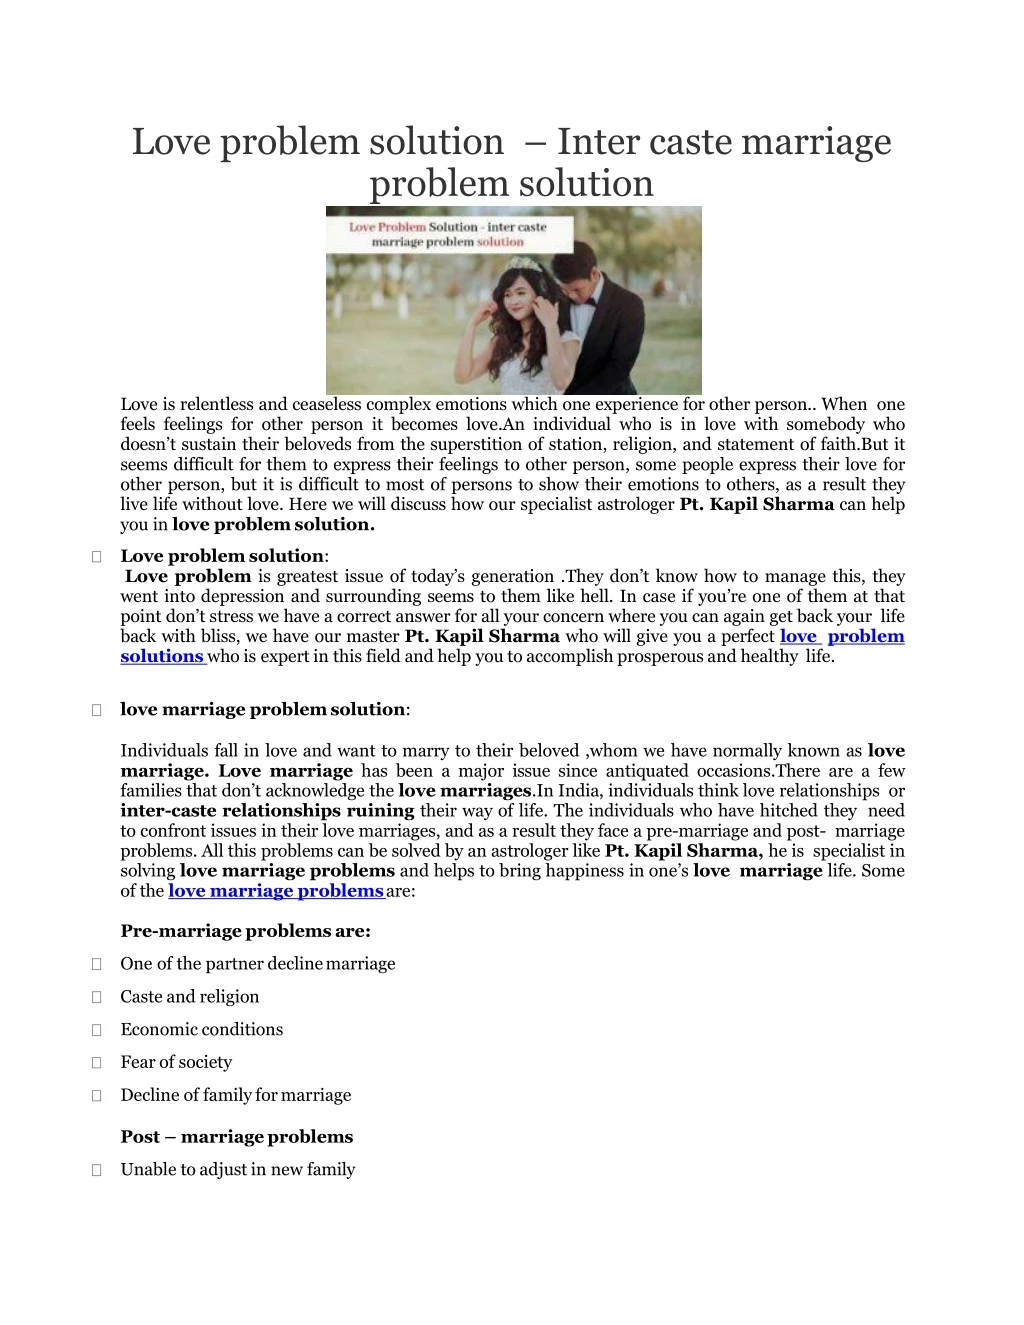 love problem solution inter caste marriage problem solution